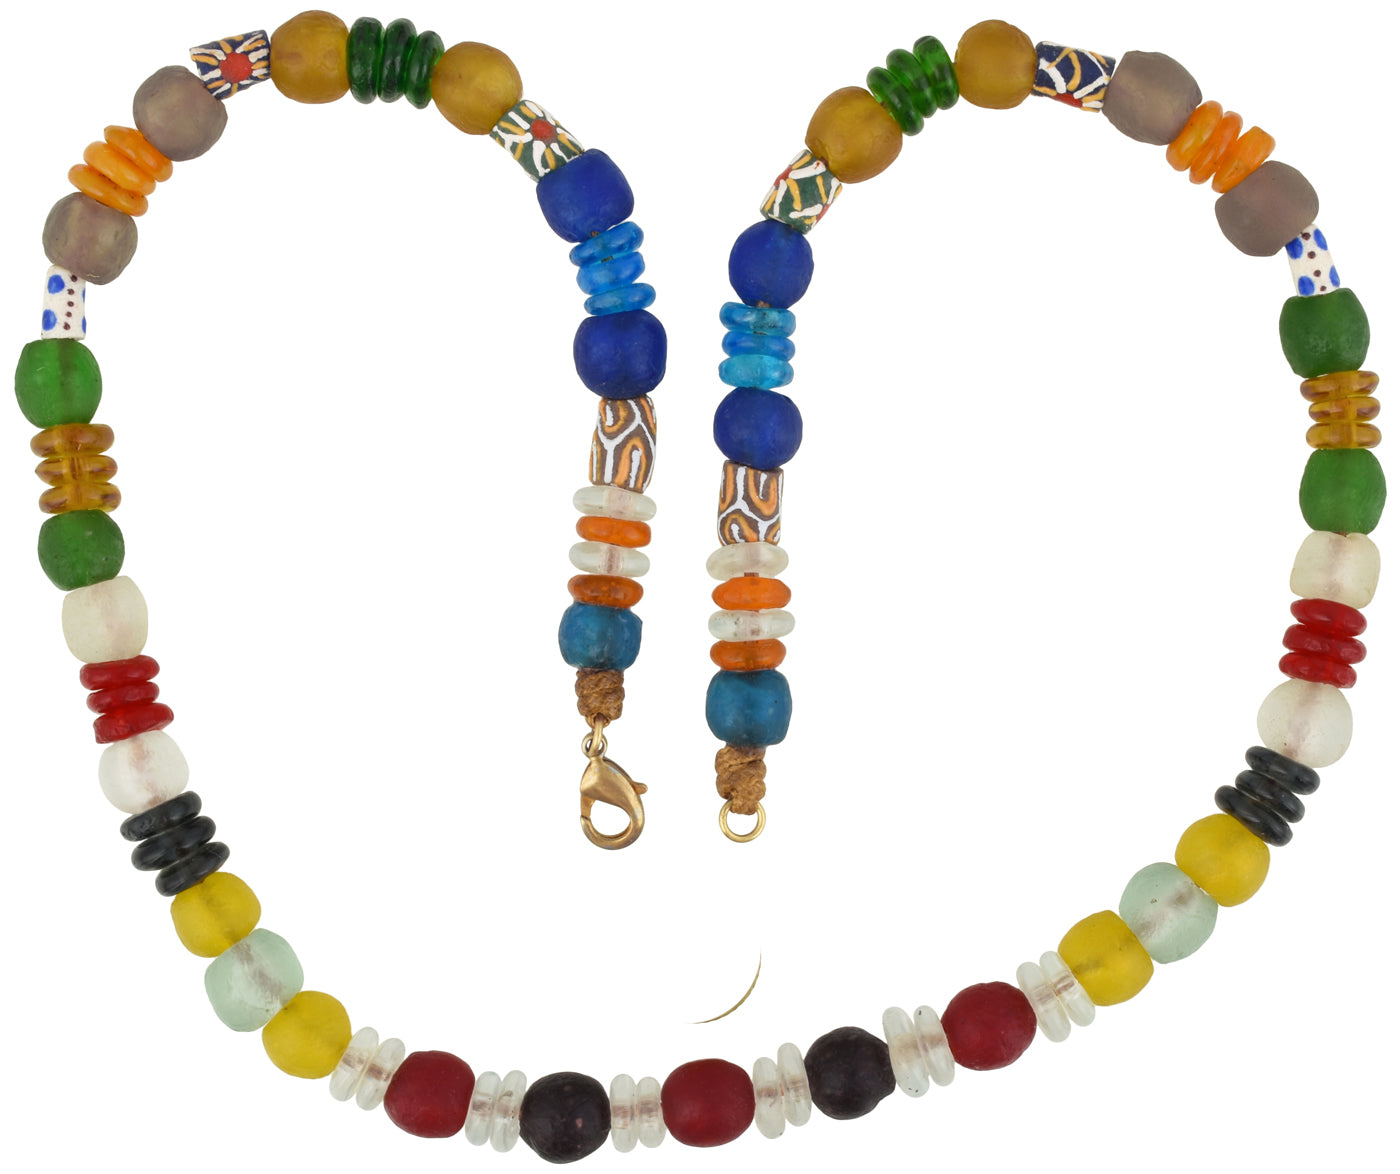 Handmade necklace recycled powder glass beads Krobo Ghana jewelry African trade - Tribalgh